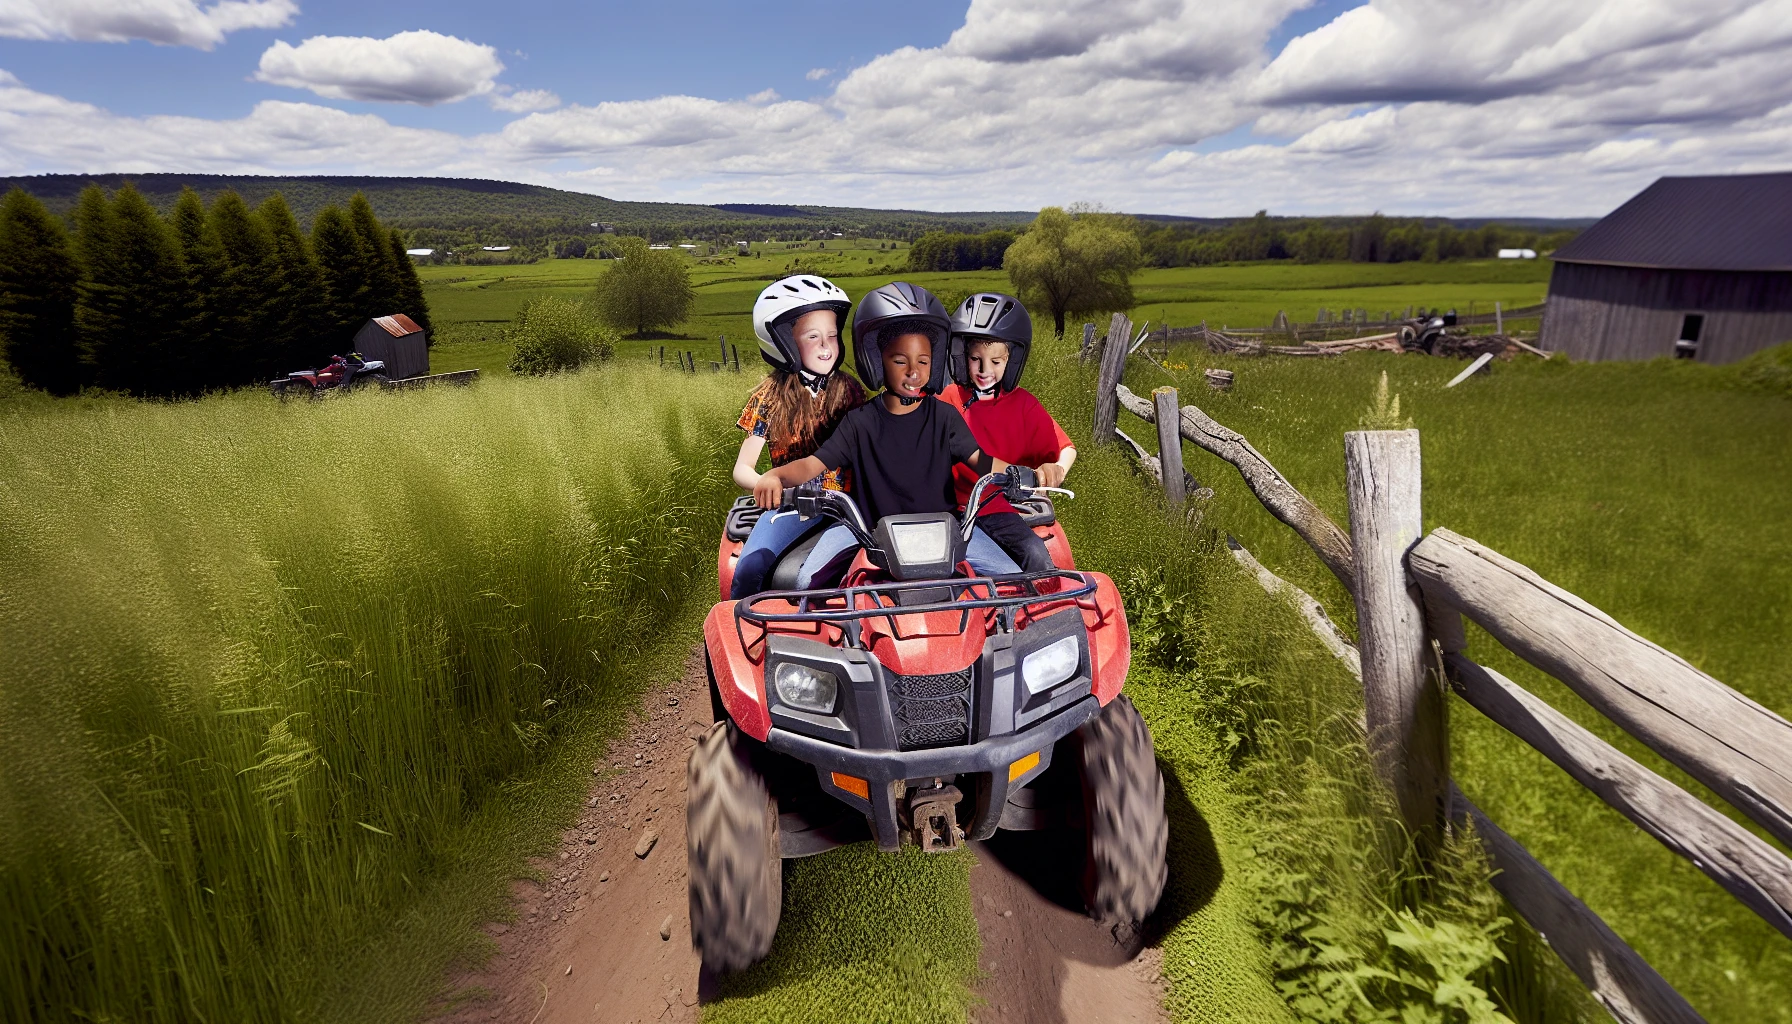 Children riding ATV in a rural area